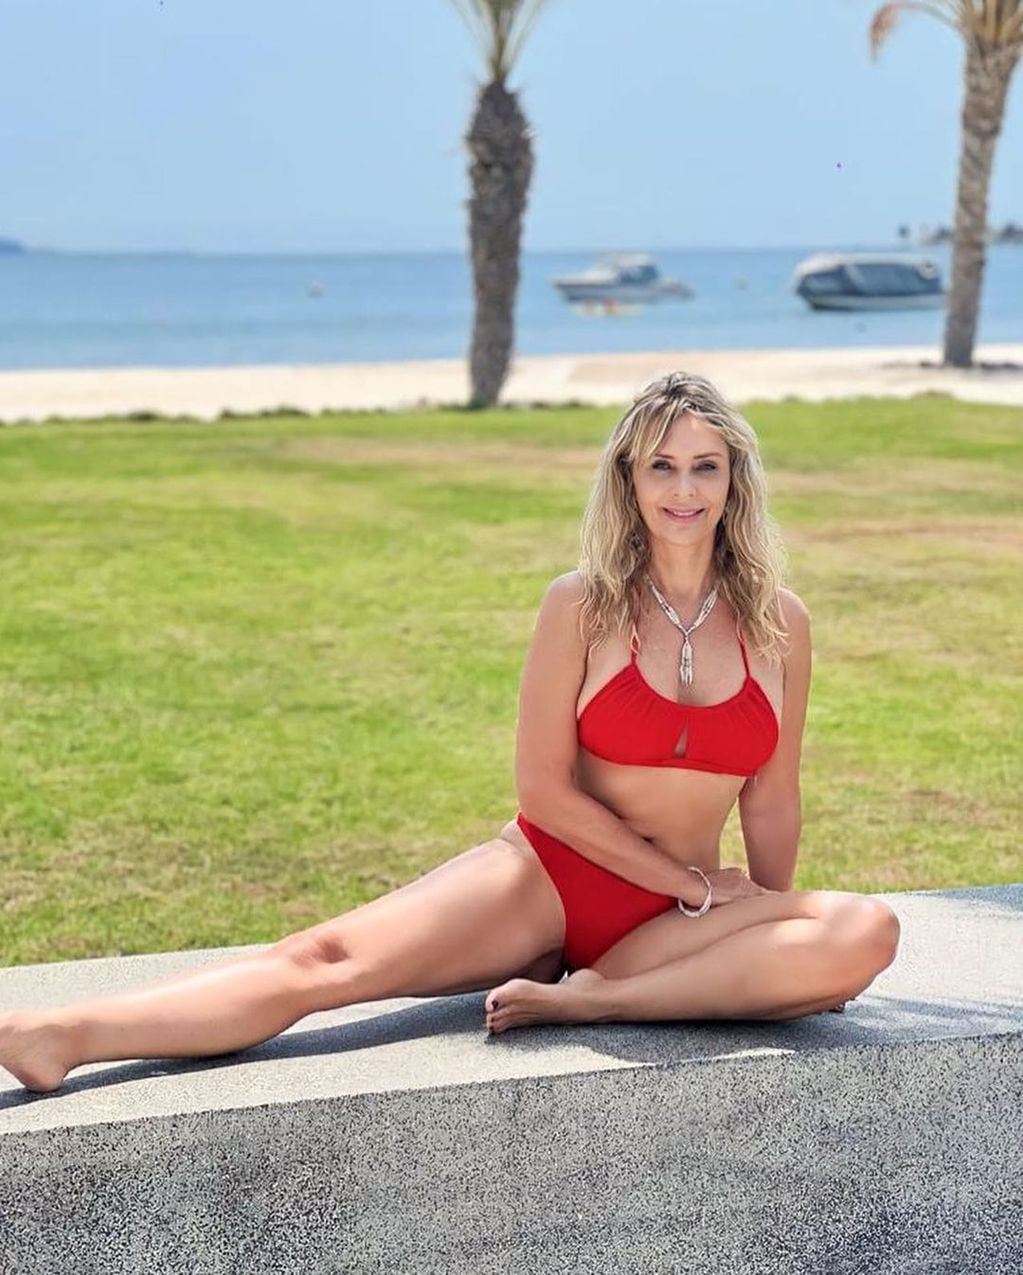 La panelista de TV posó ante la cámara con una llamativa bikini roja / Foto: Instagram